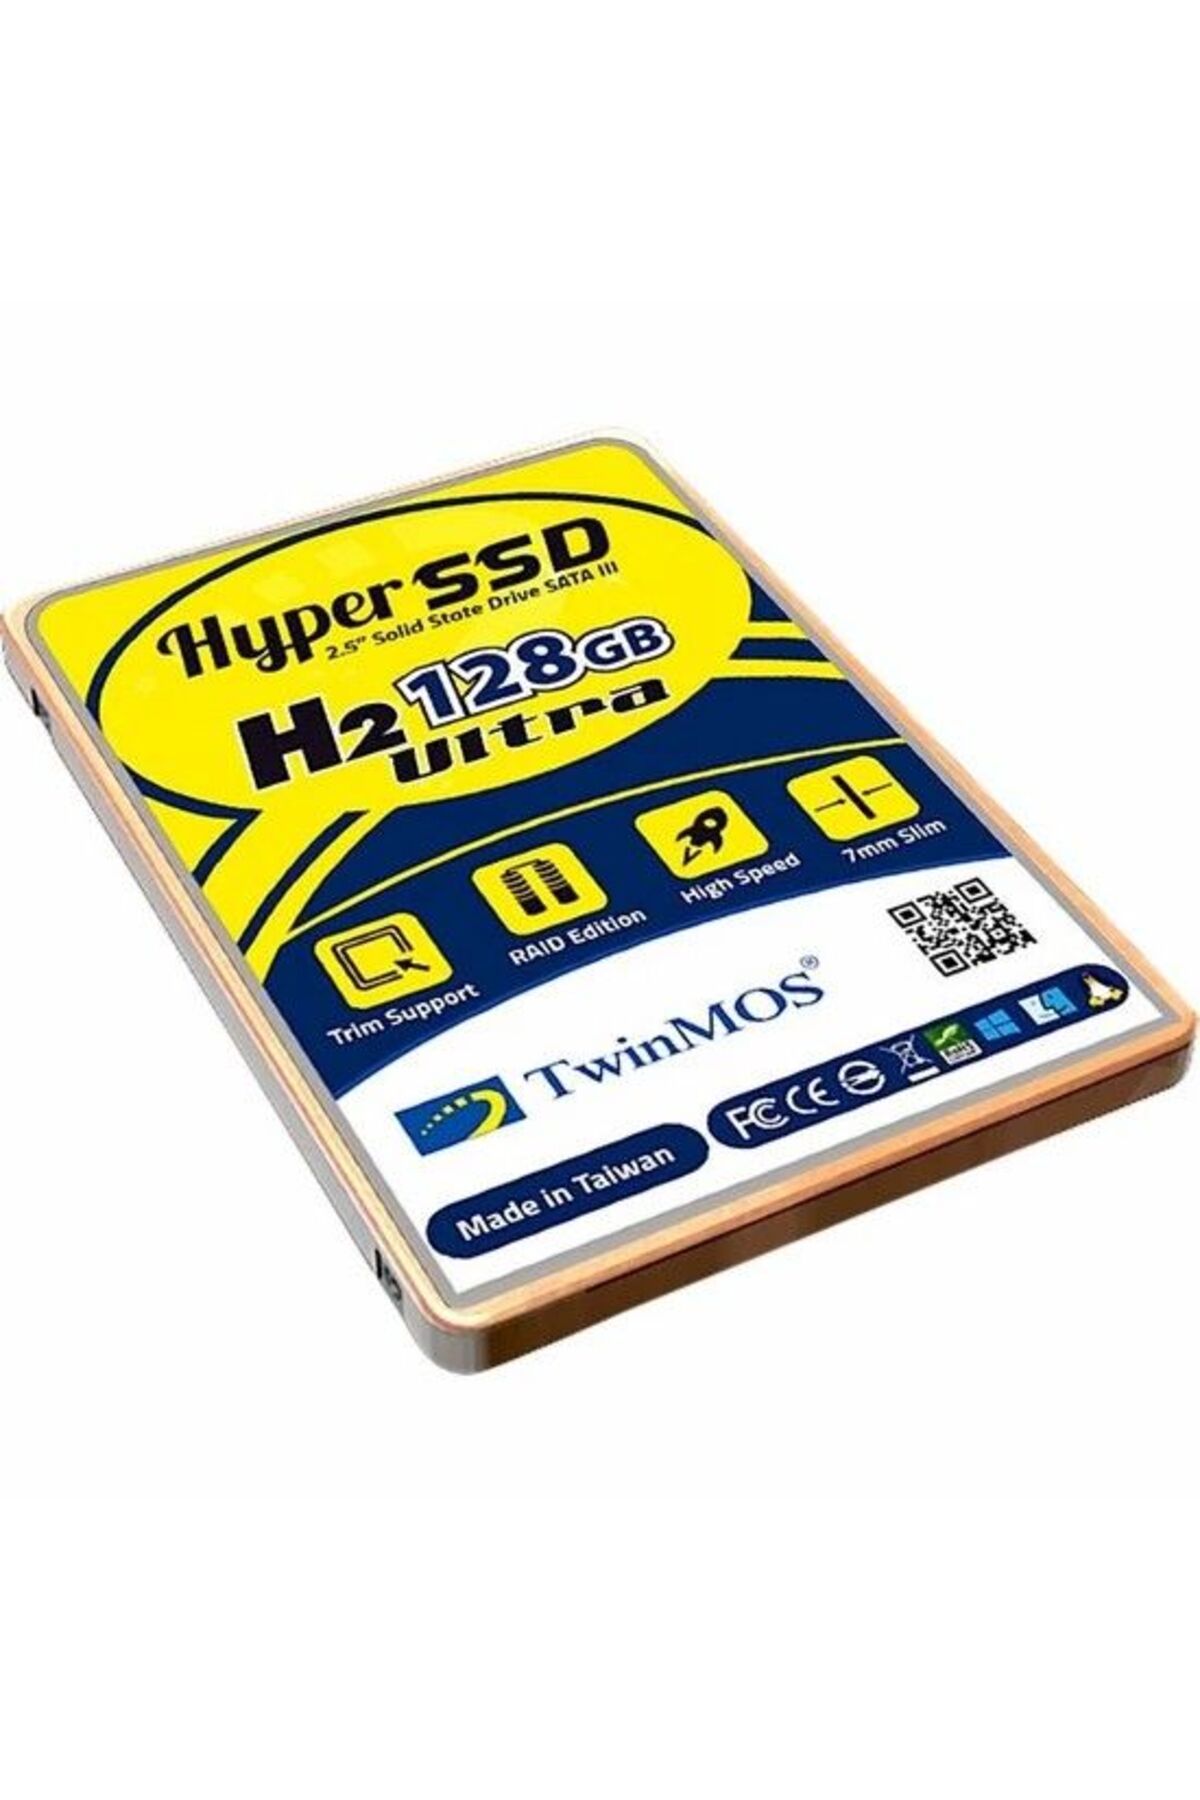 TwinMOS 128gb 2.5" Sata3 Ssd (580MB-550MB/S) 3dnand